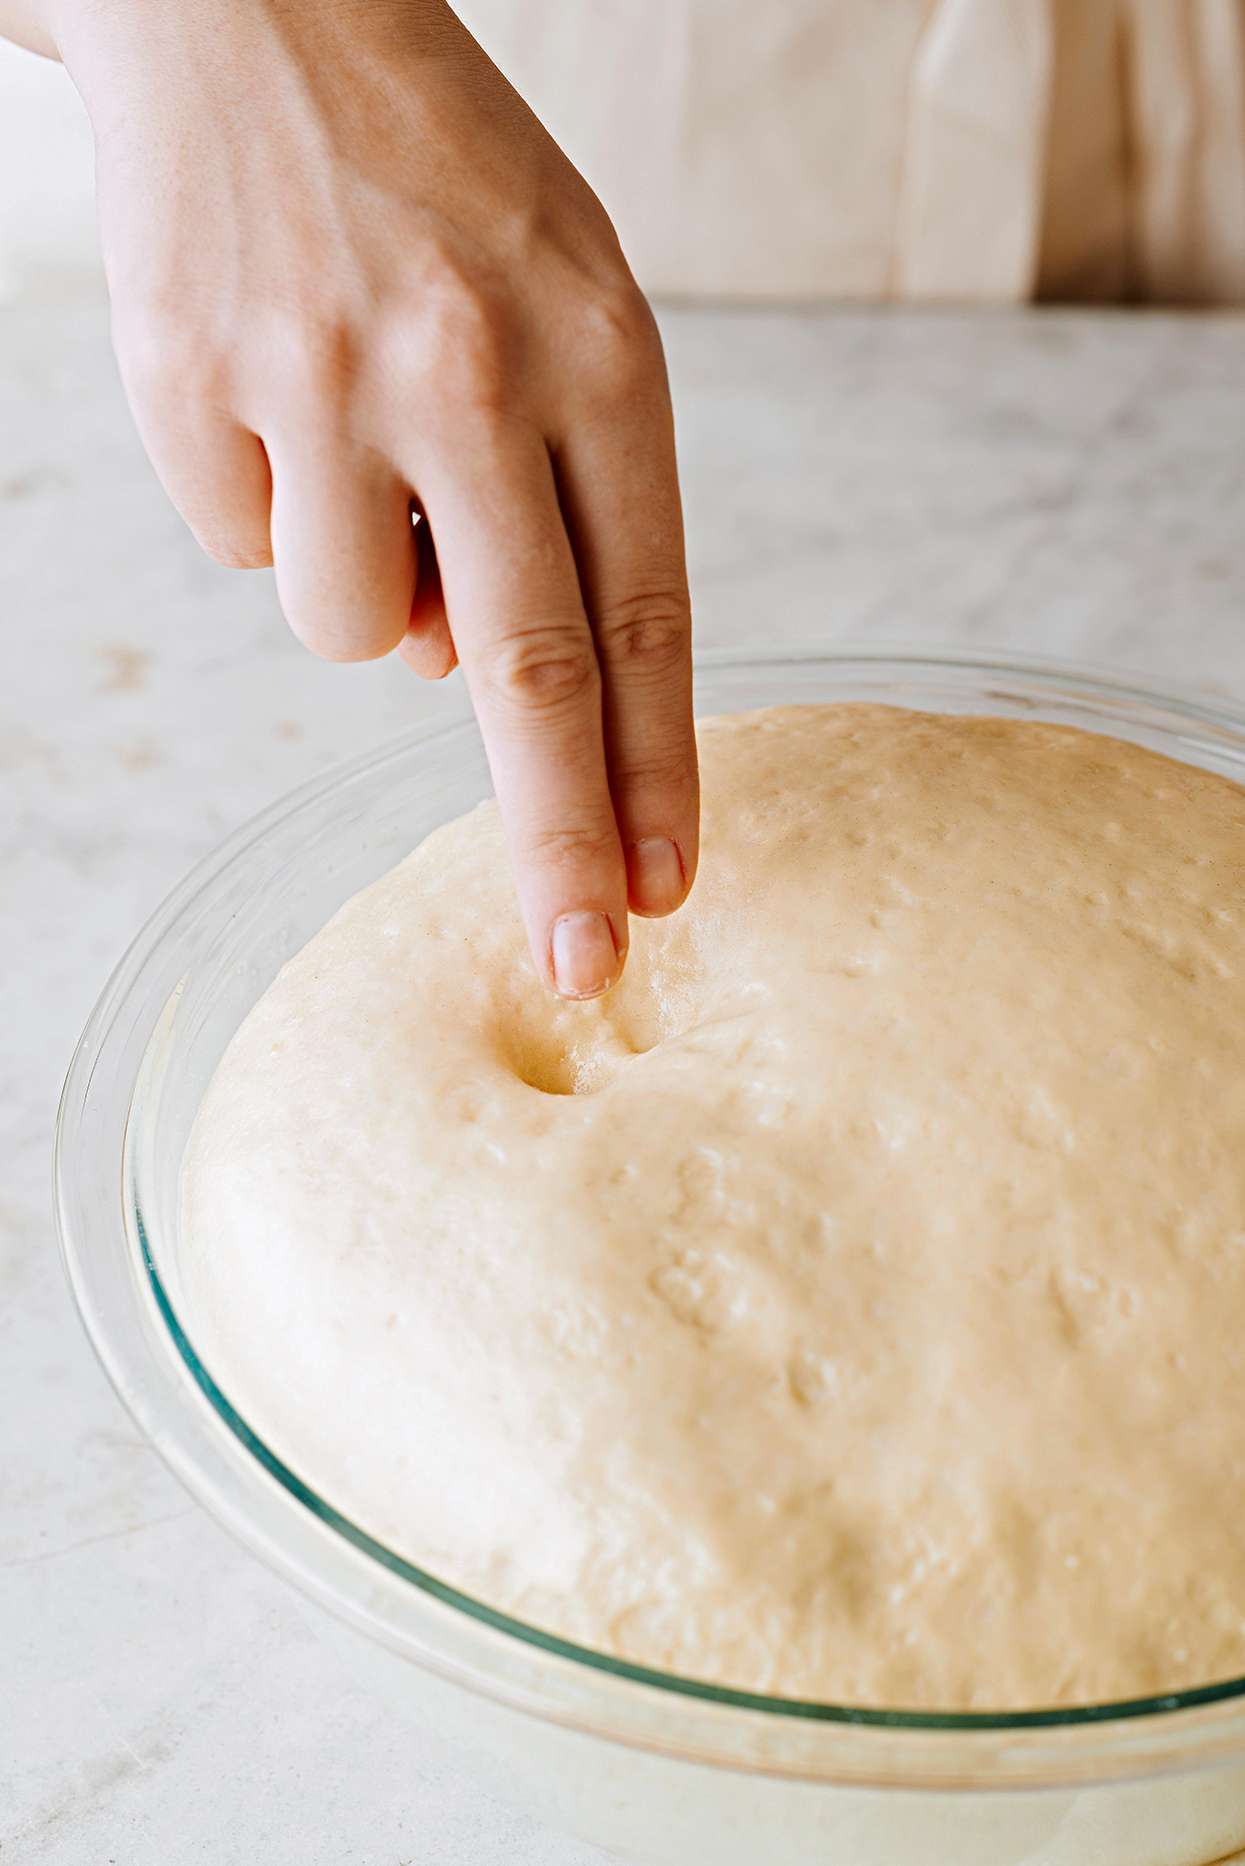 Testing dough for cinnamon rolls